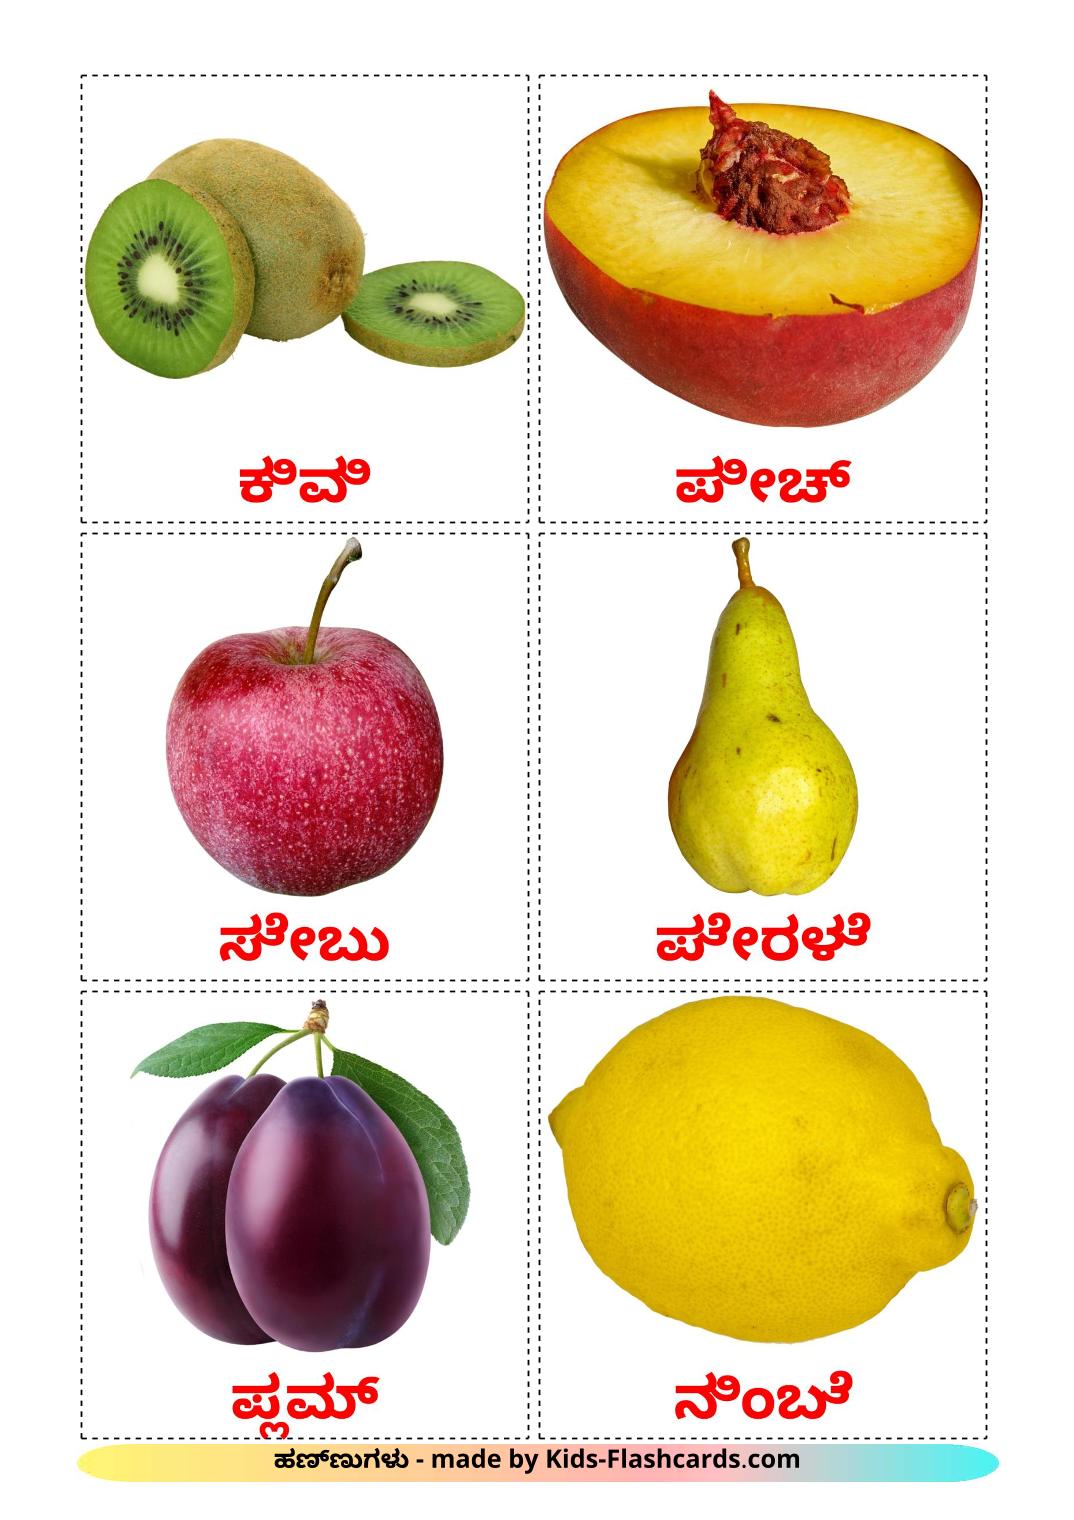 Frutas - 20 fichas de kannada para imprimir gratis 